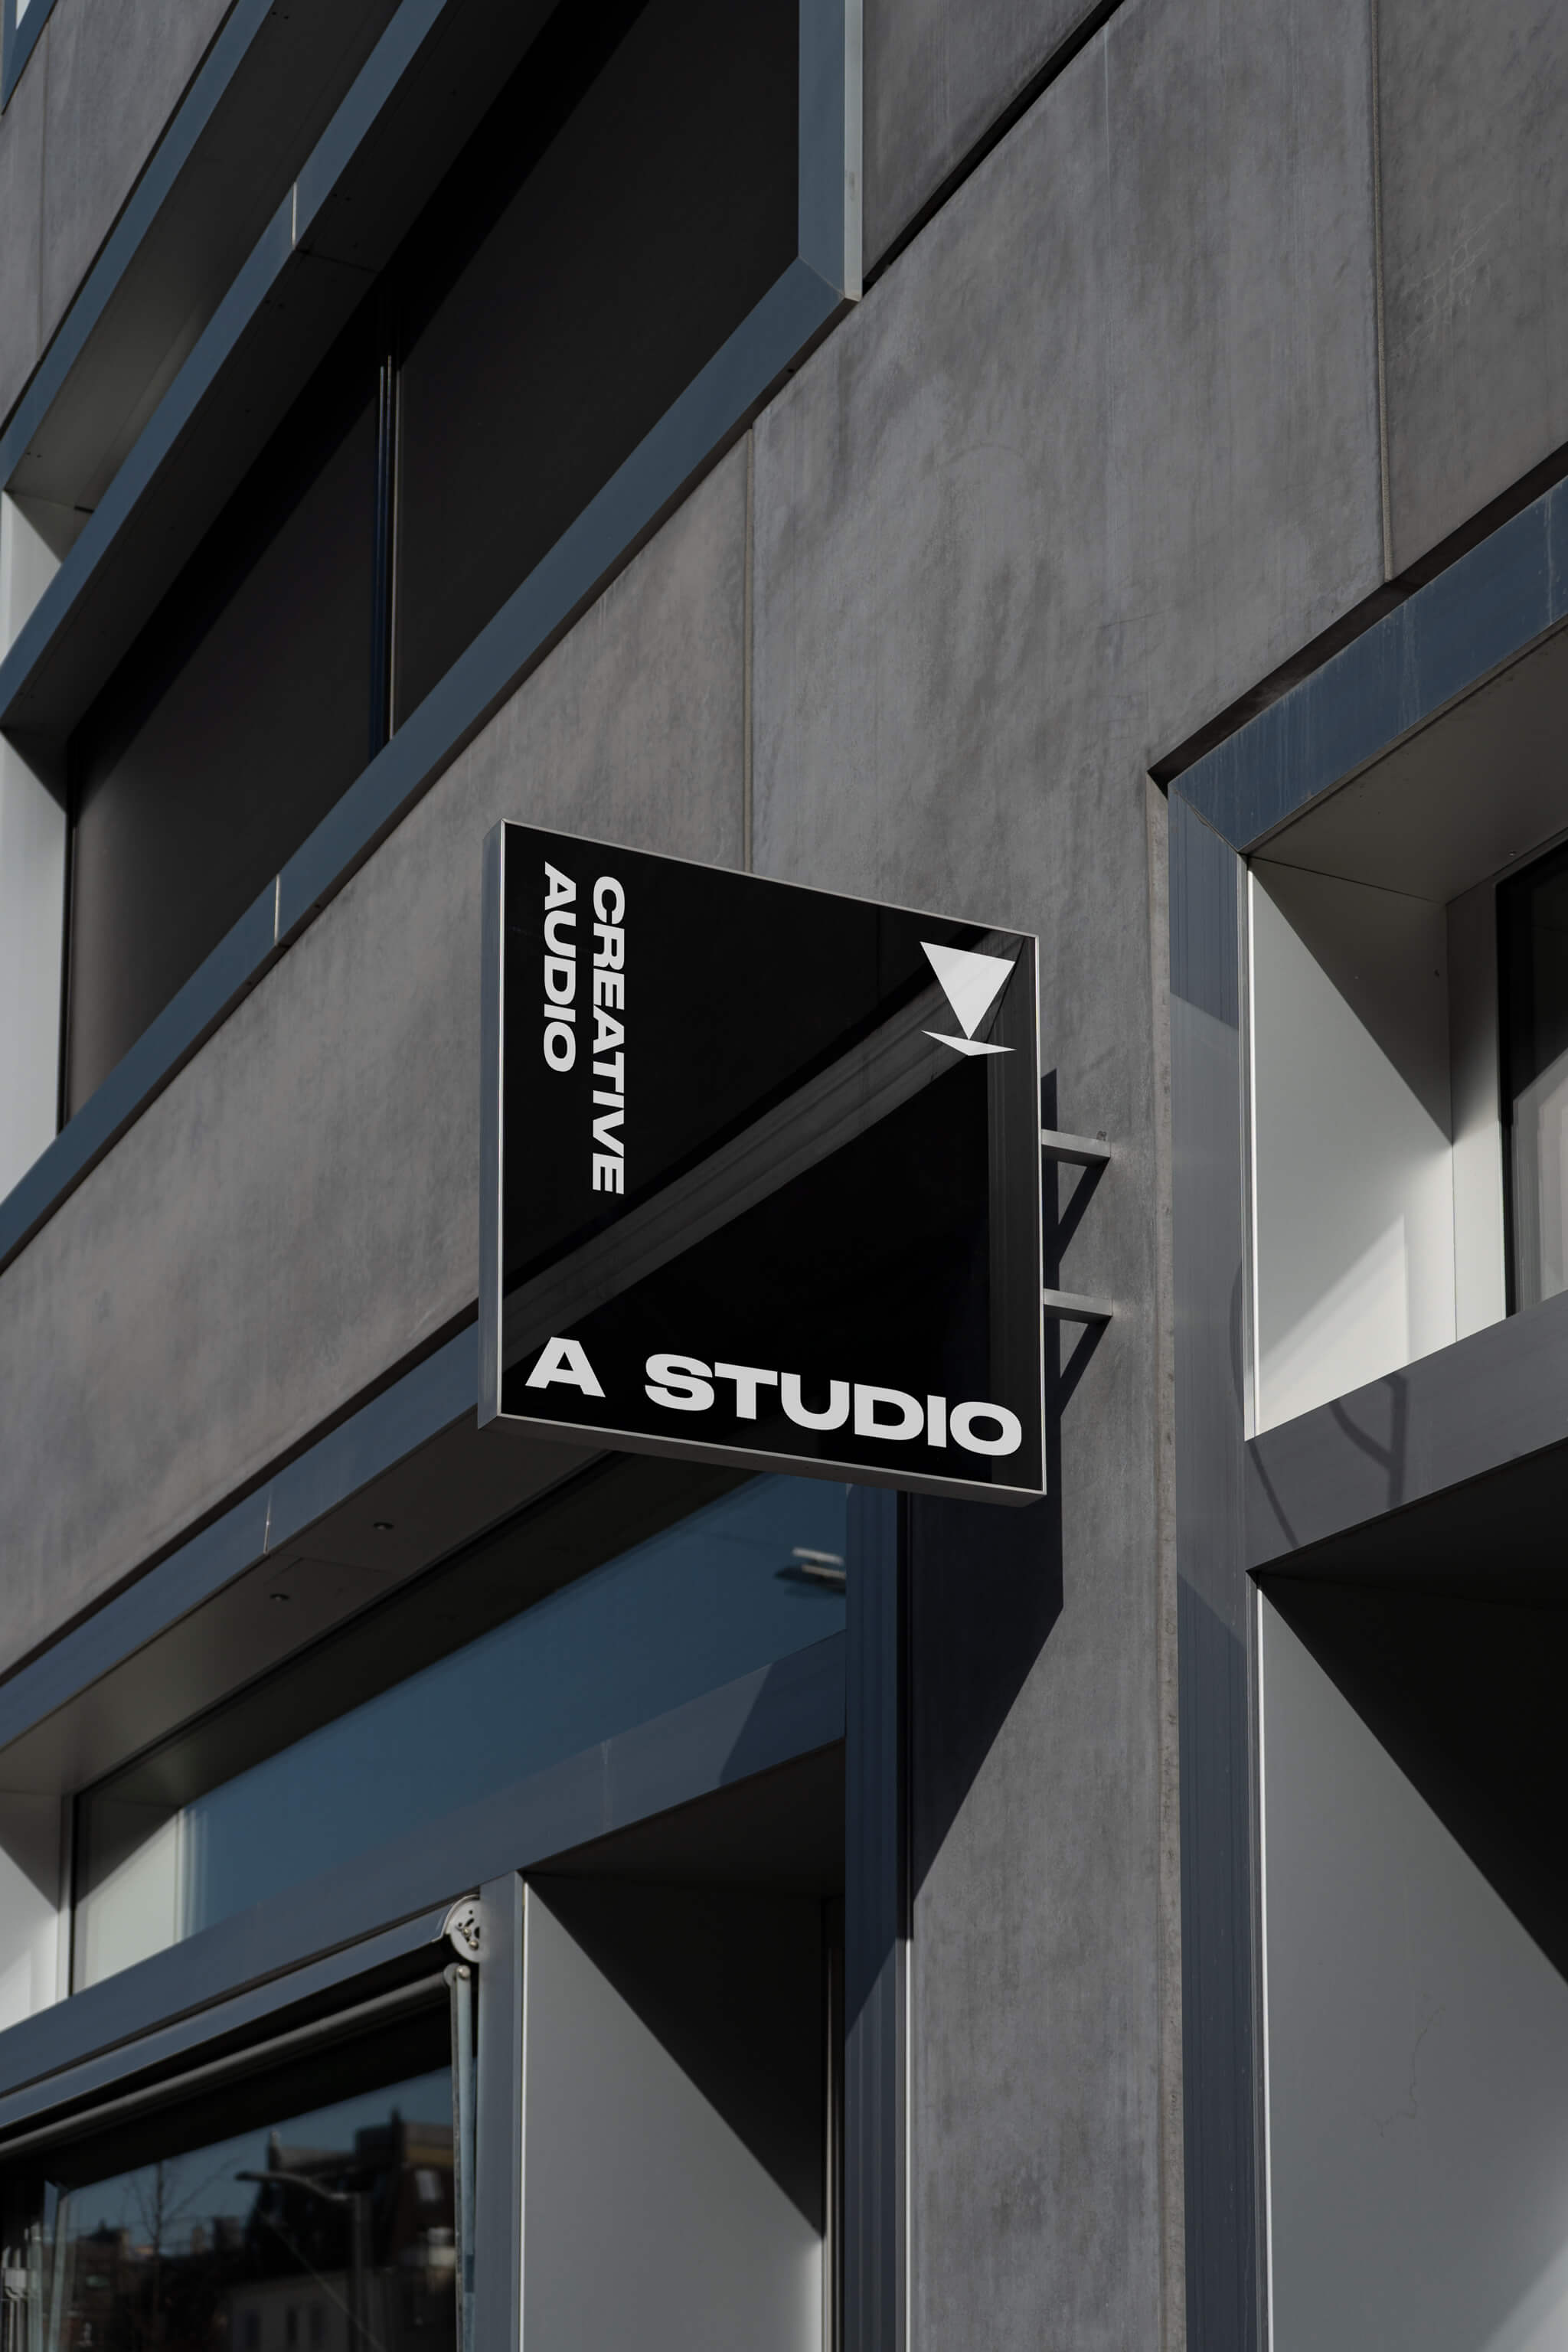 Studioschild an Außenfassade / Studio sign on exterior facade